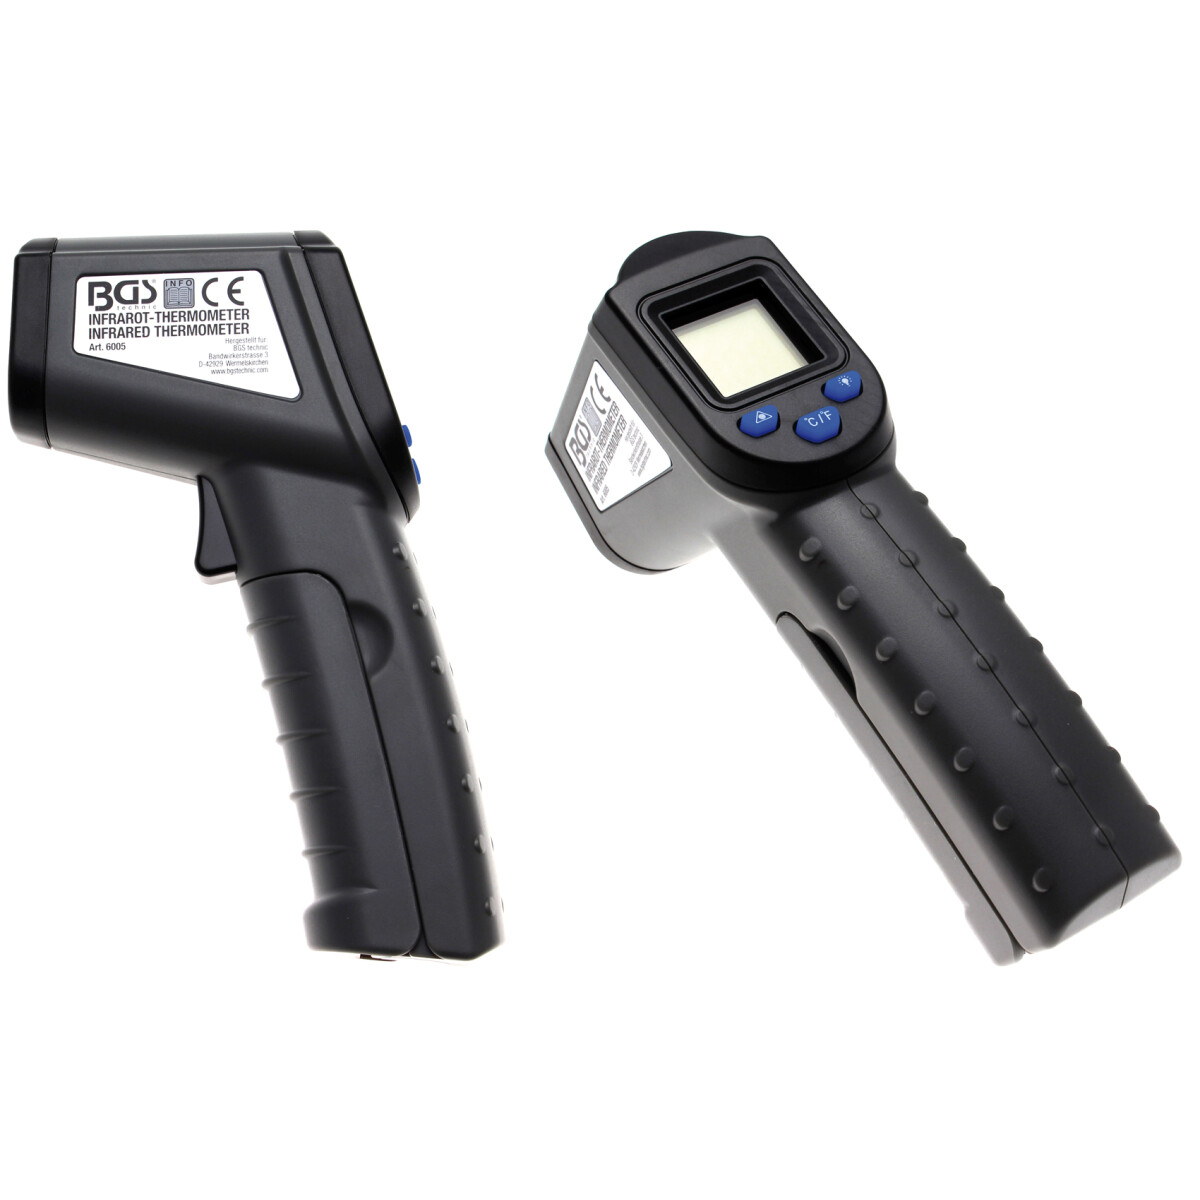 BGS Digital Laser Thermometer | -50Â°C to 500Â° C (BGS 6005)